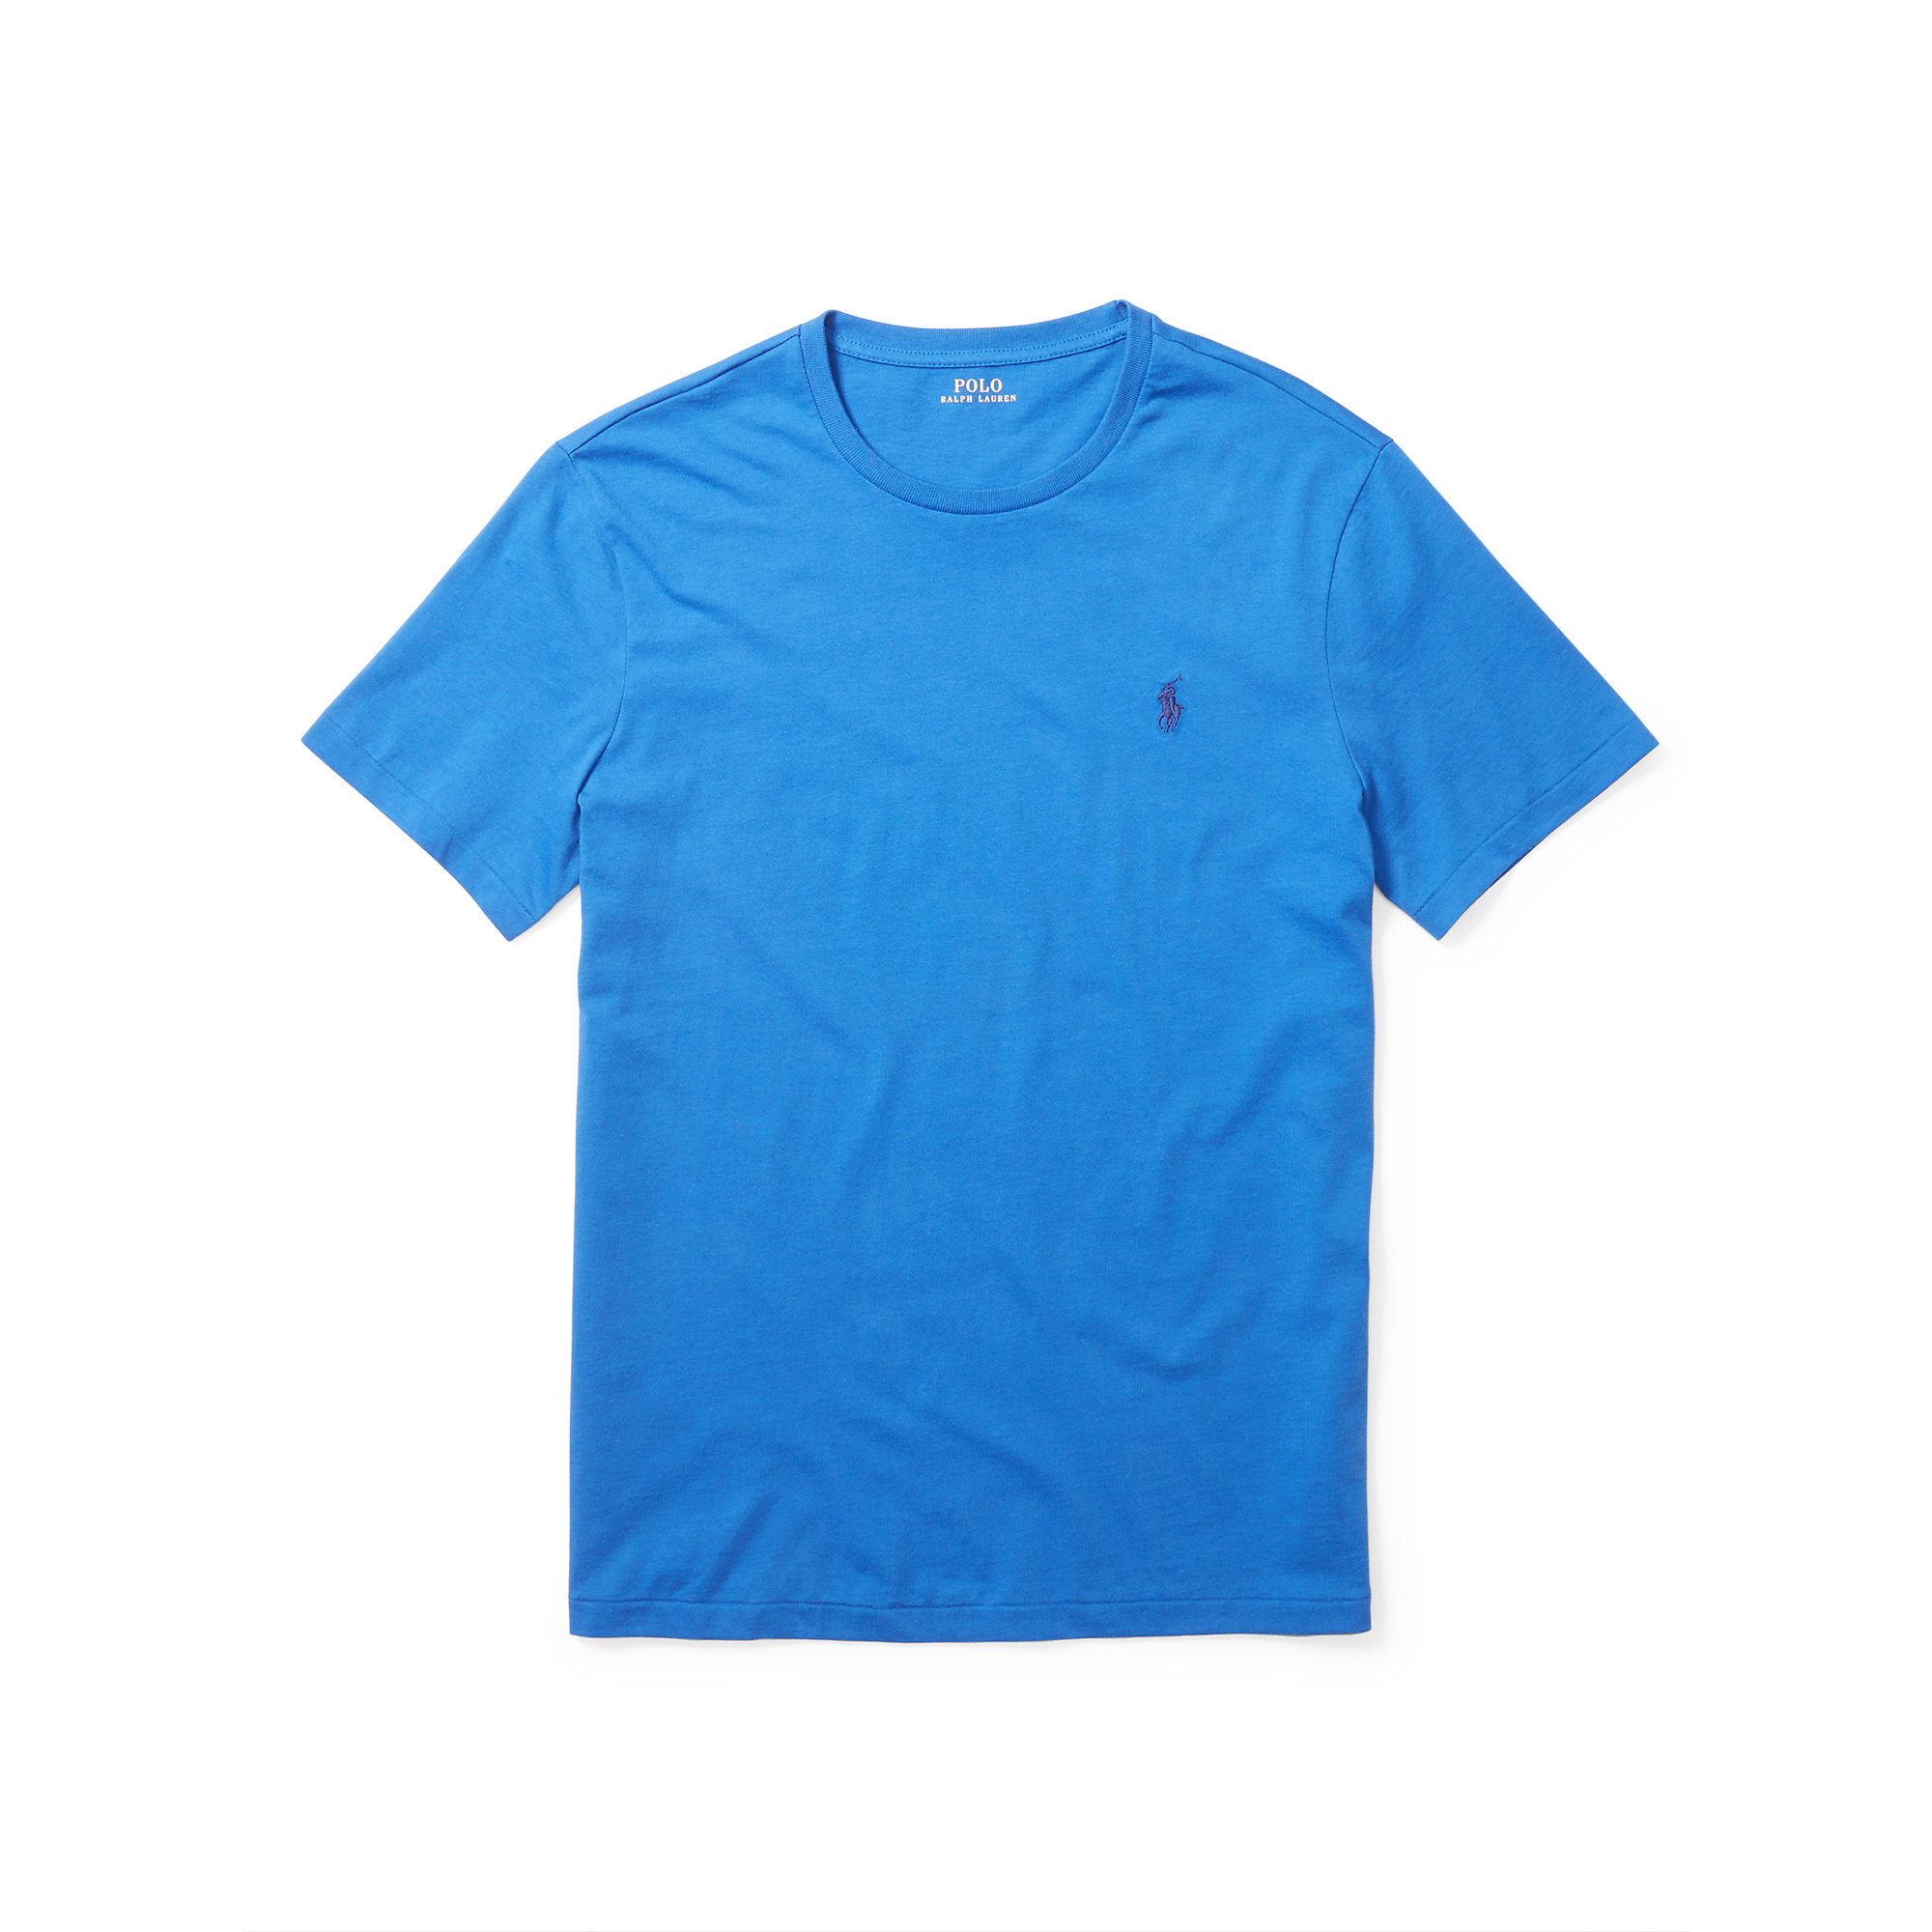 Polo ralph lauren Custom-fit Cotton T-shirt in Blue for Men | Lyst ...